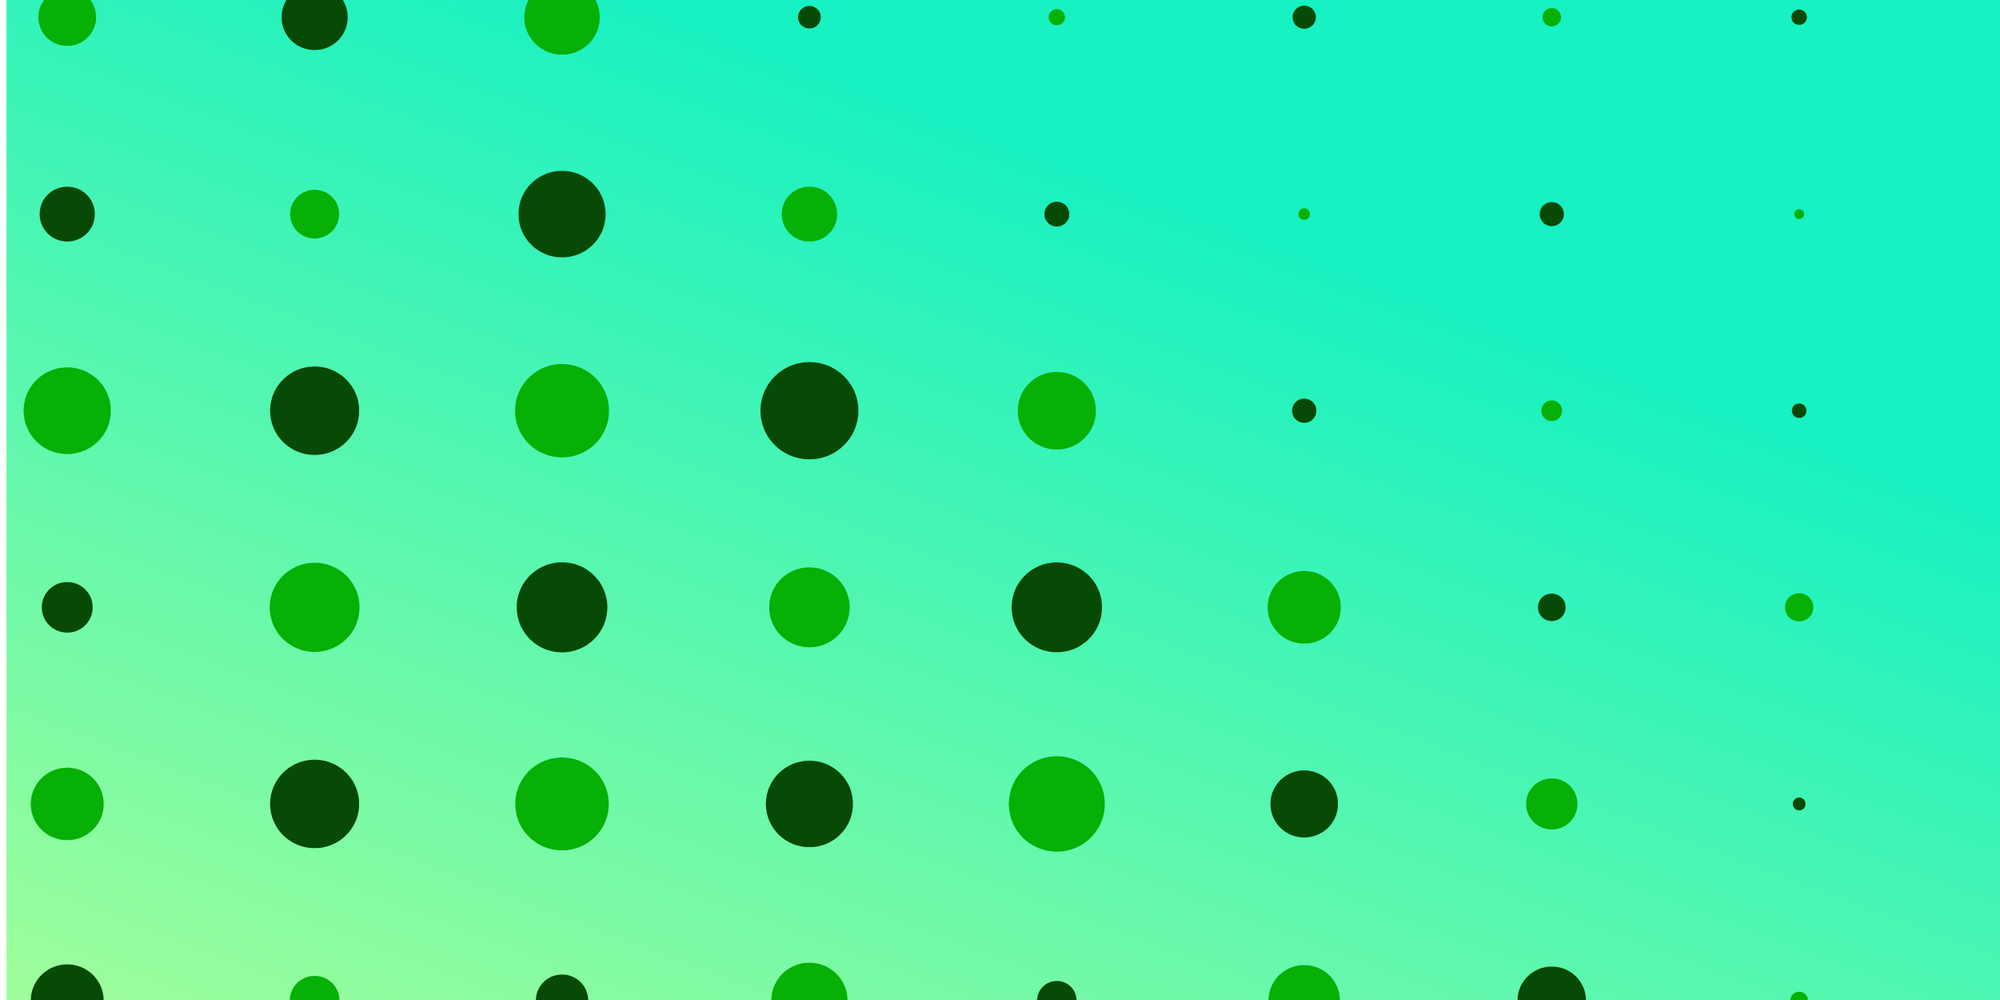 A regular pattern of circles of diminishing size